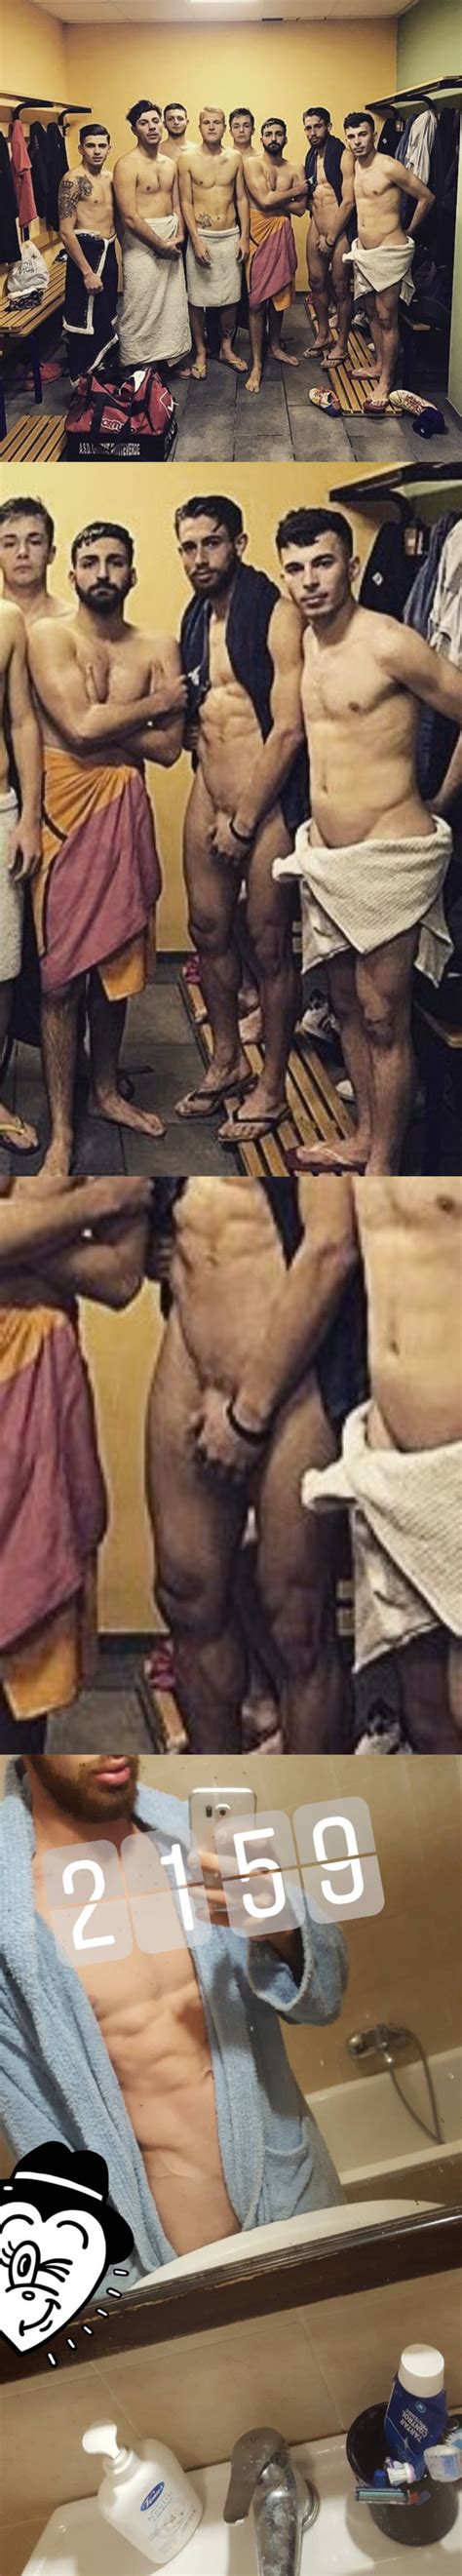 Italian Footballer Naked During Team Selfie Locker Room Spycamfromguys Hidden Cams Spying On Men